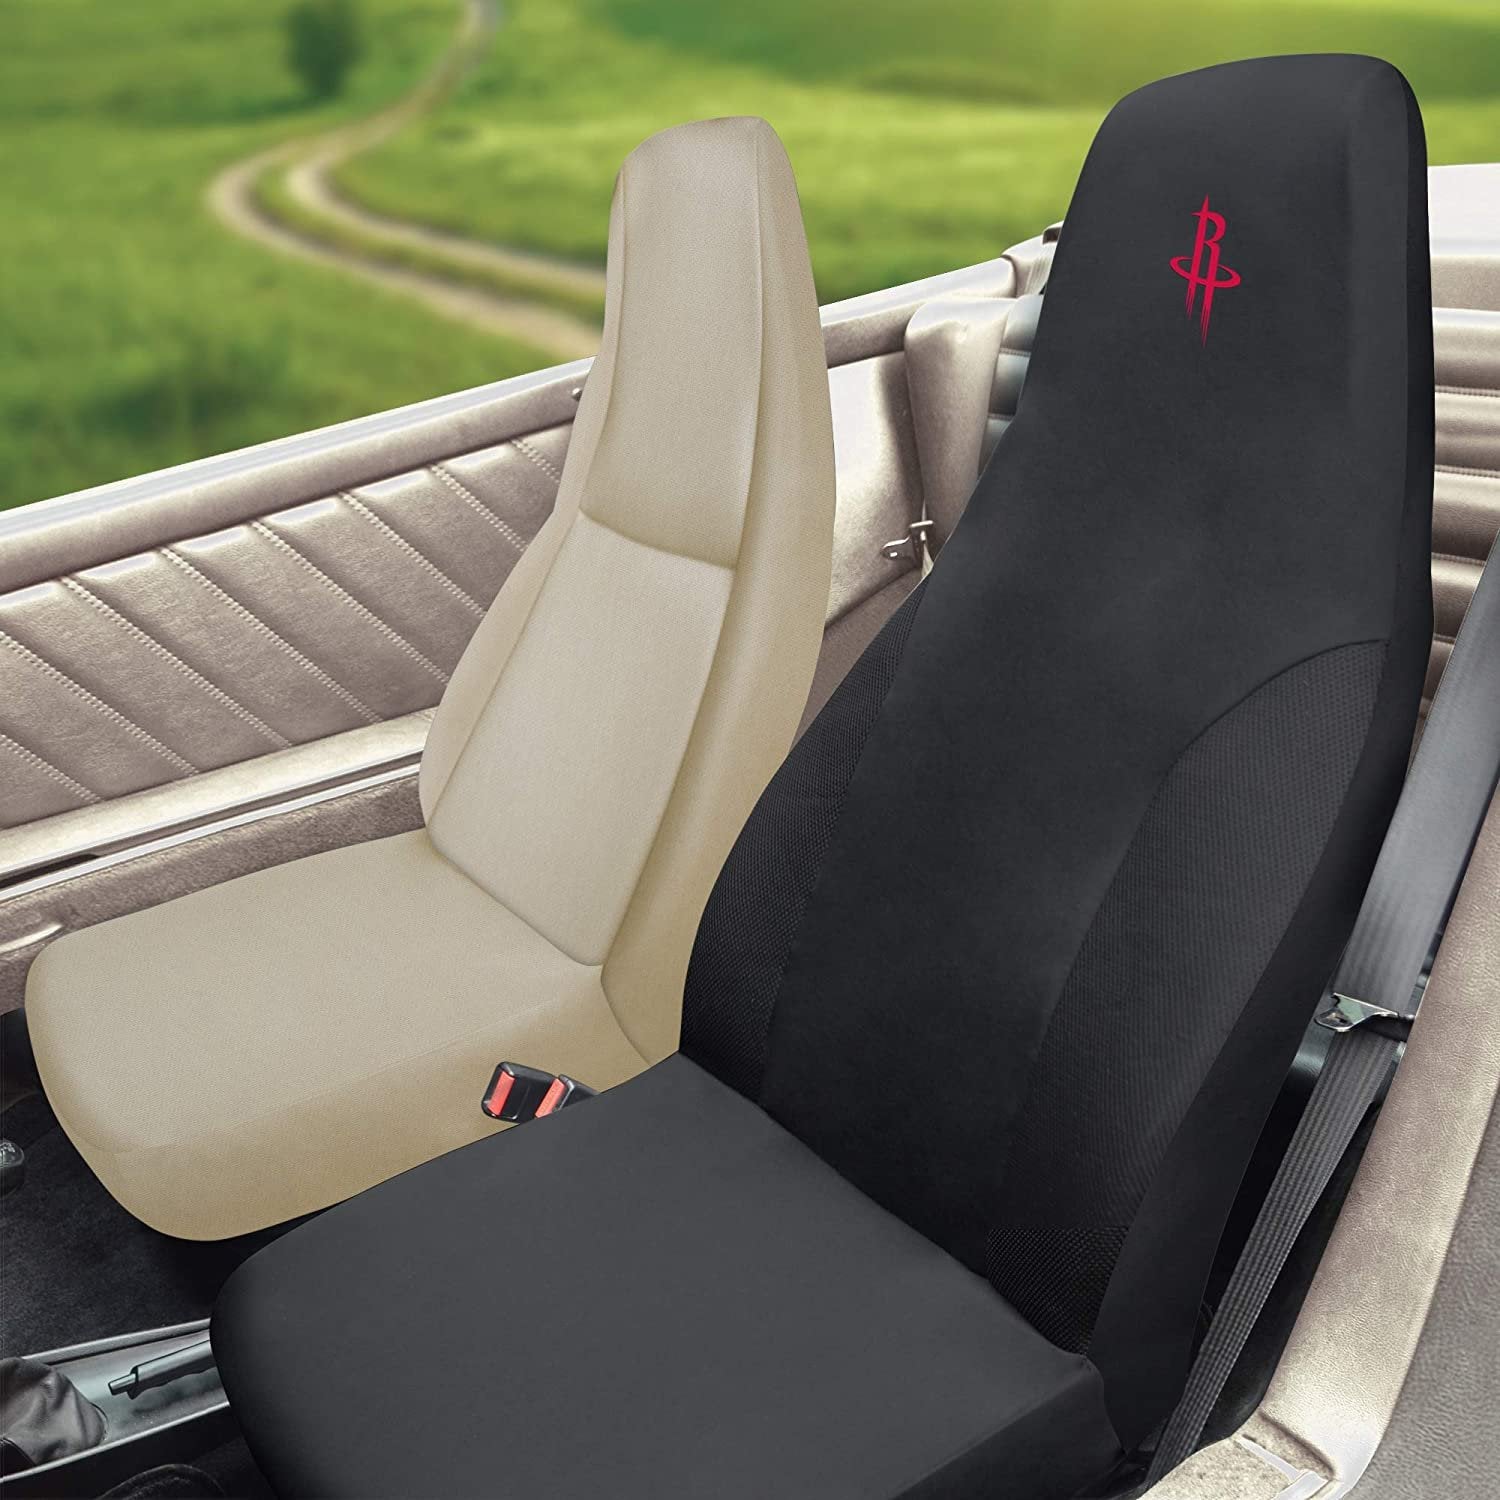 Houston Rockets Bucket Auto Seat Cover 48x20 Inch Elastic